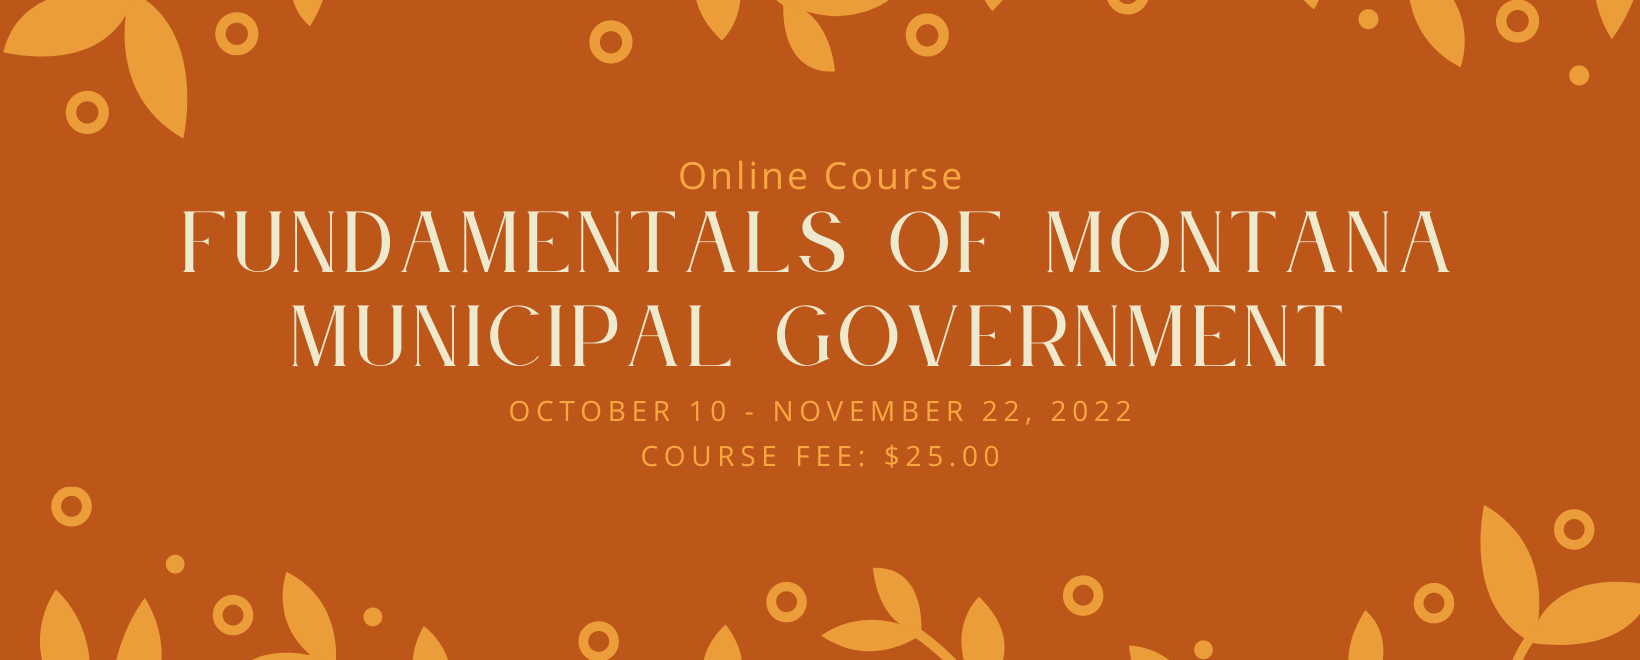 Fundamentals of Montana Municipal Government Fall 2022 Online Course Banner